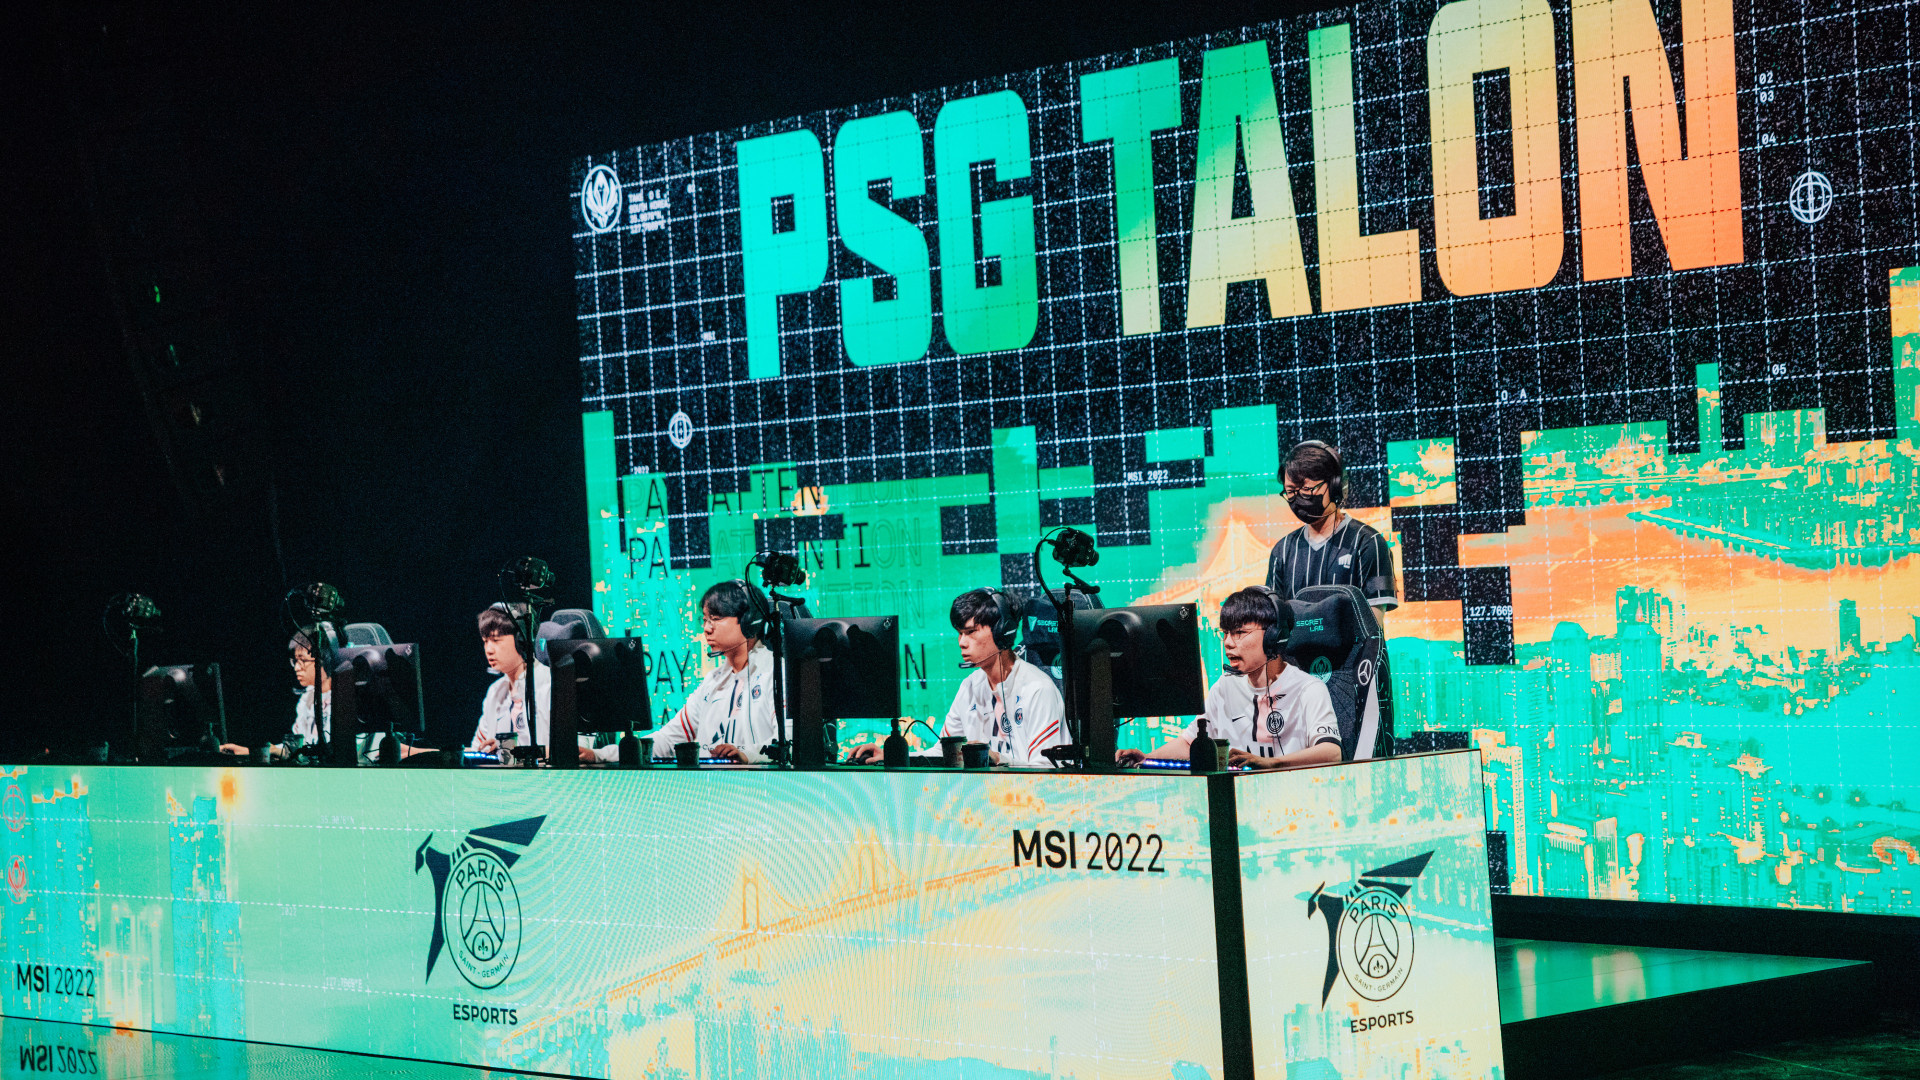 Esports: PSG Talon, A professional League of Legends team, MSI 2022 competitive event. 1920x1080 Full HD Wallpaper.